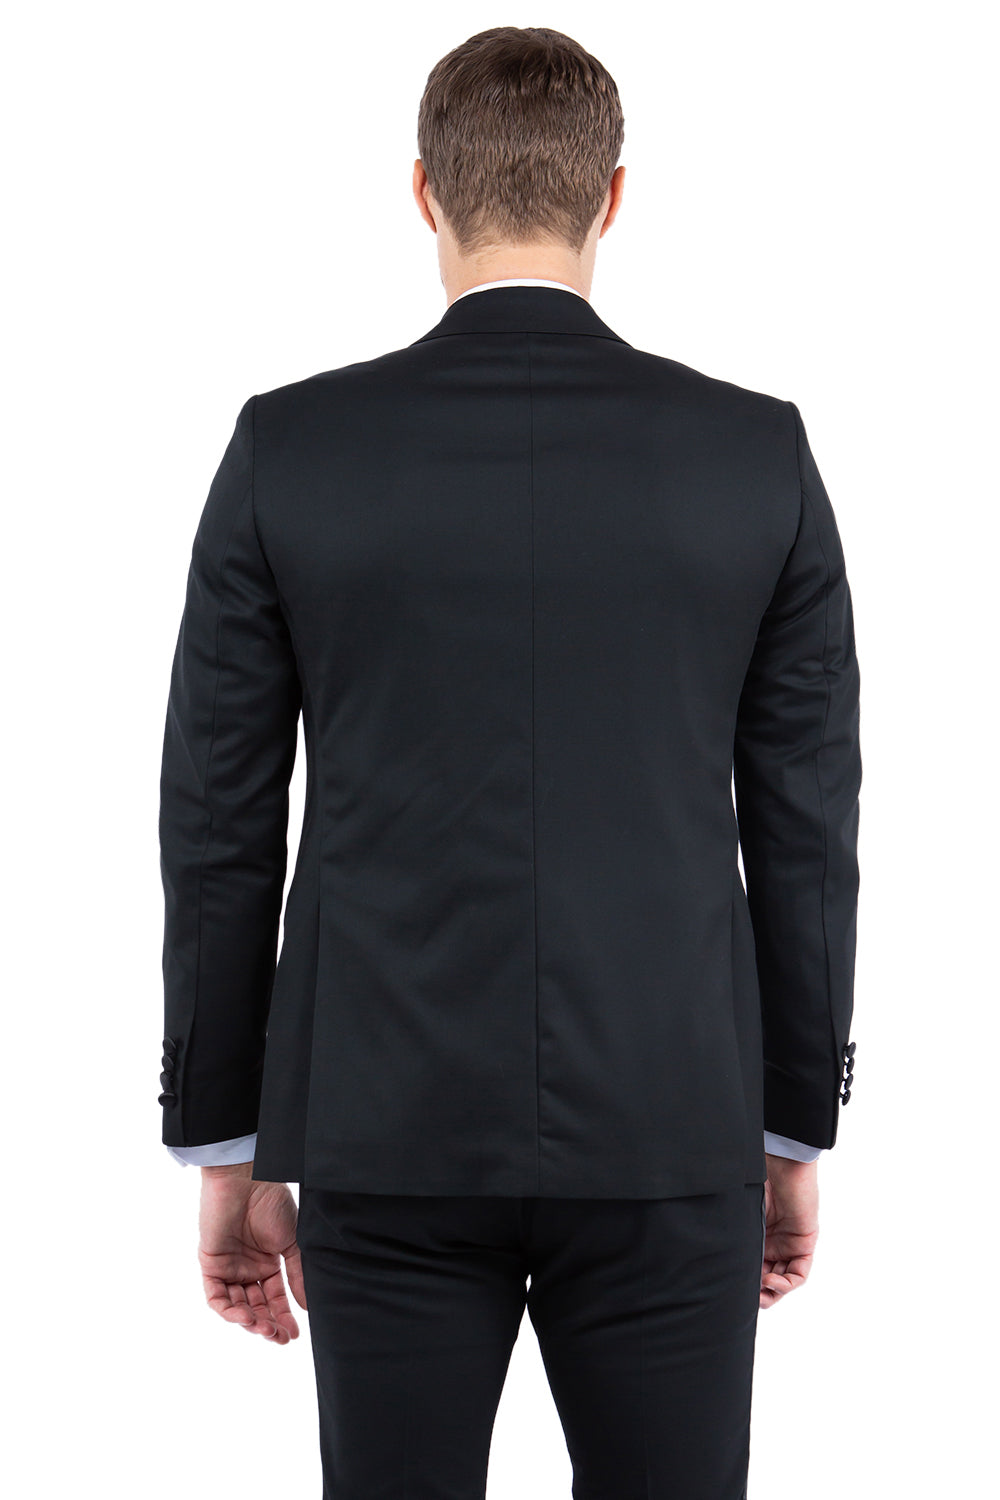 Black Zegarie Peak Lapel Tuxedo Jacket For Men MJT365-01